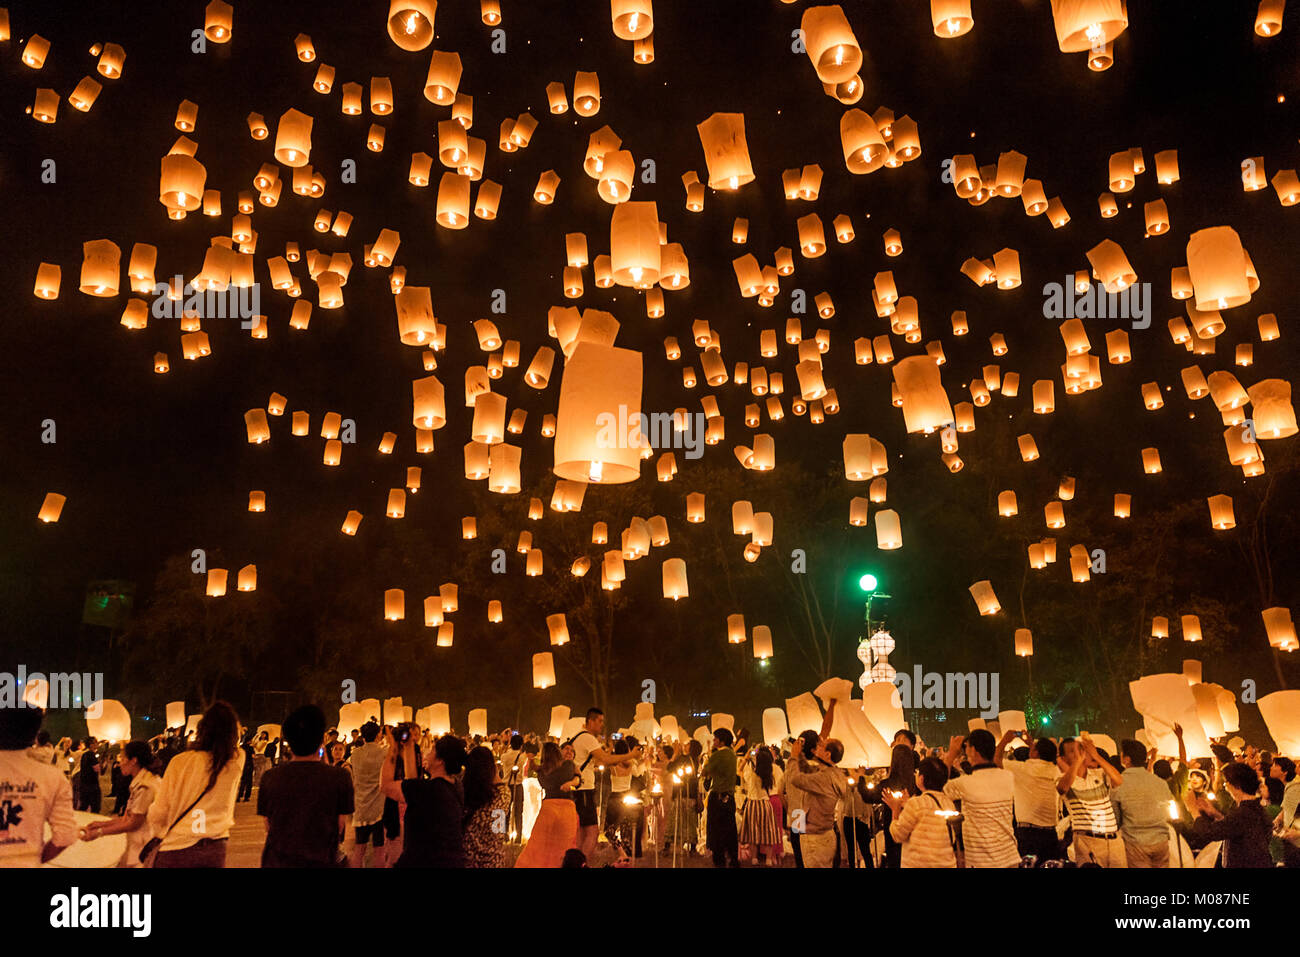 Yi Peng Laternenfest, wo Menschen Laternen in den Himmel freigeben, Thailand  Stockfotografie - Alamy